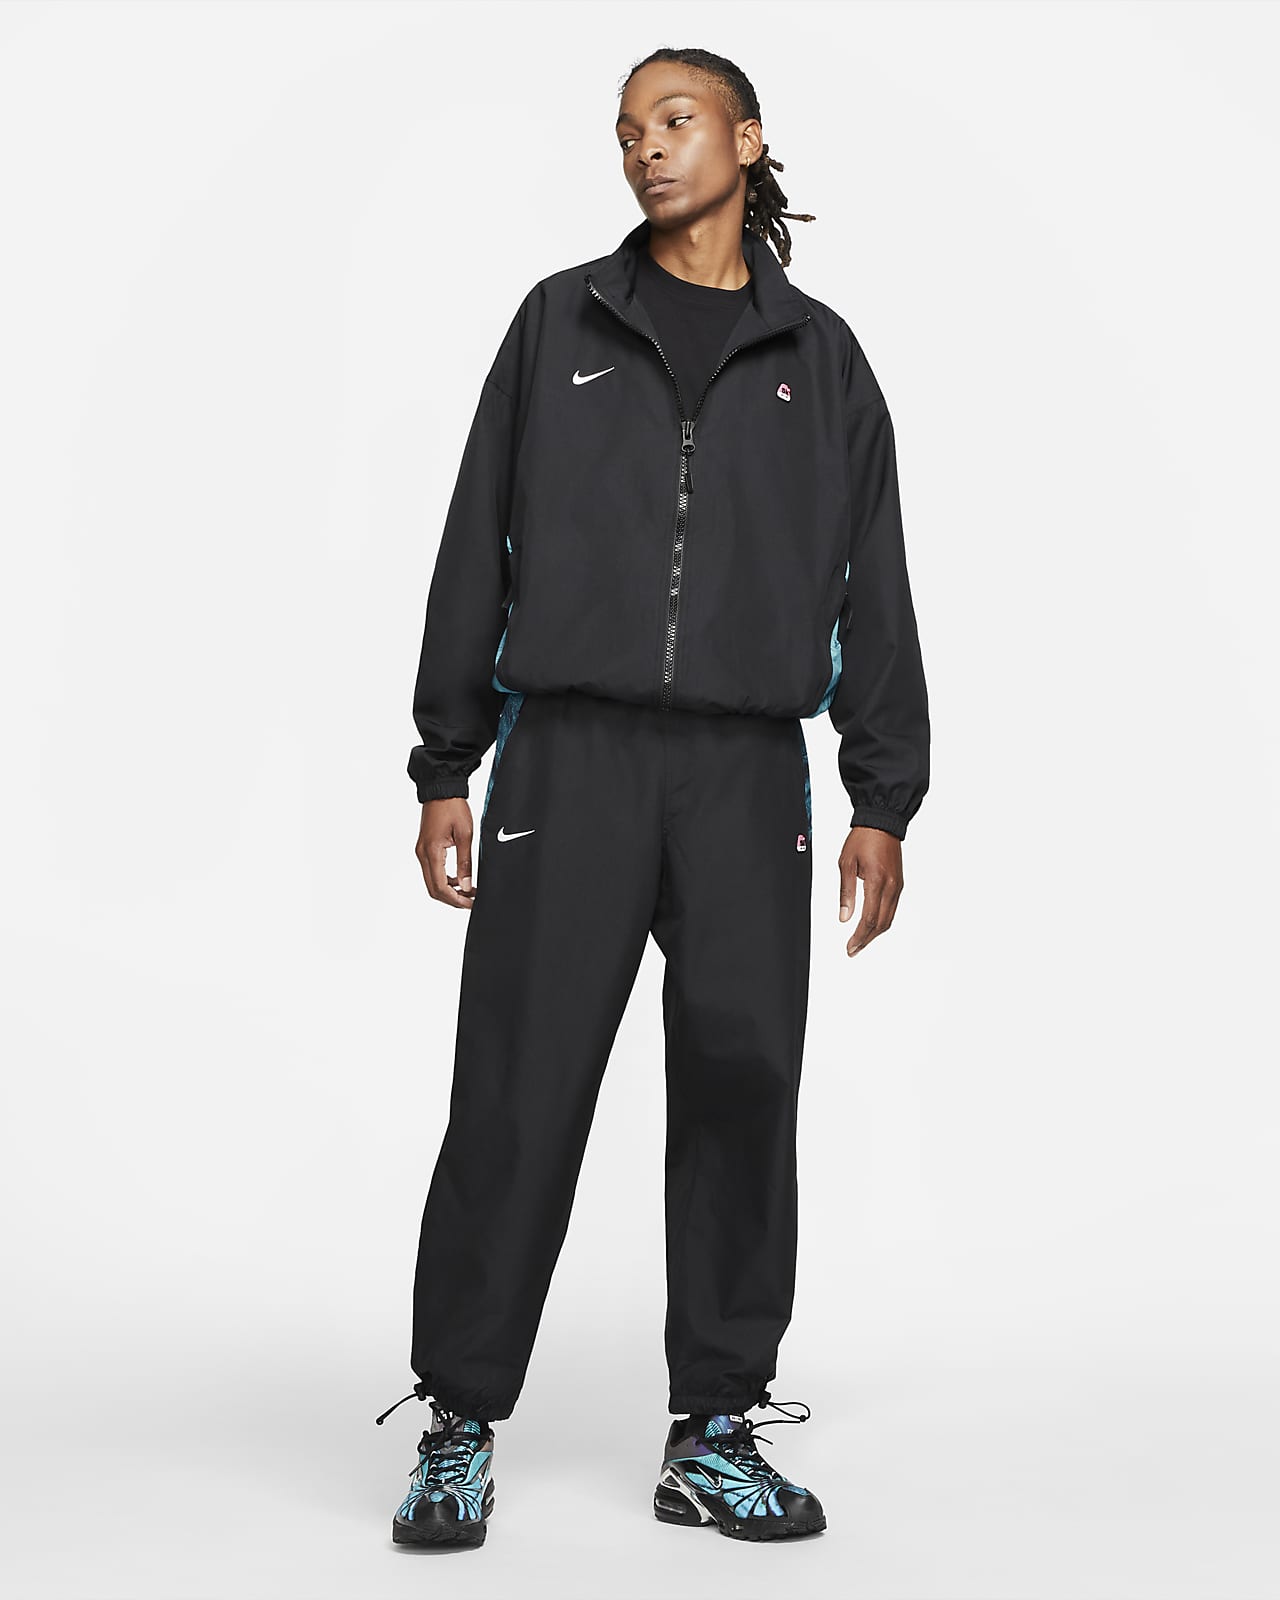 Nike x Skepta Men's Tracksuit Jacket 